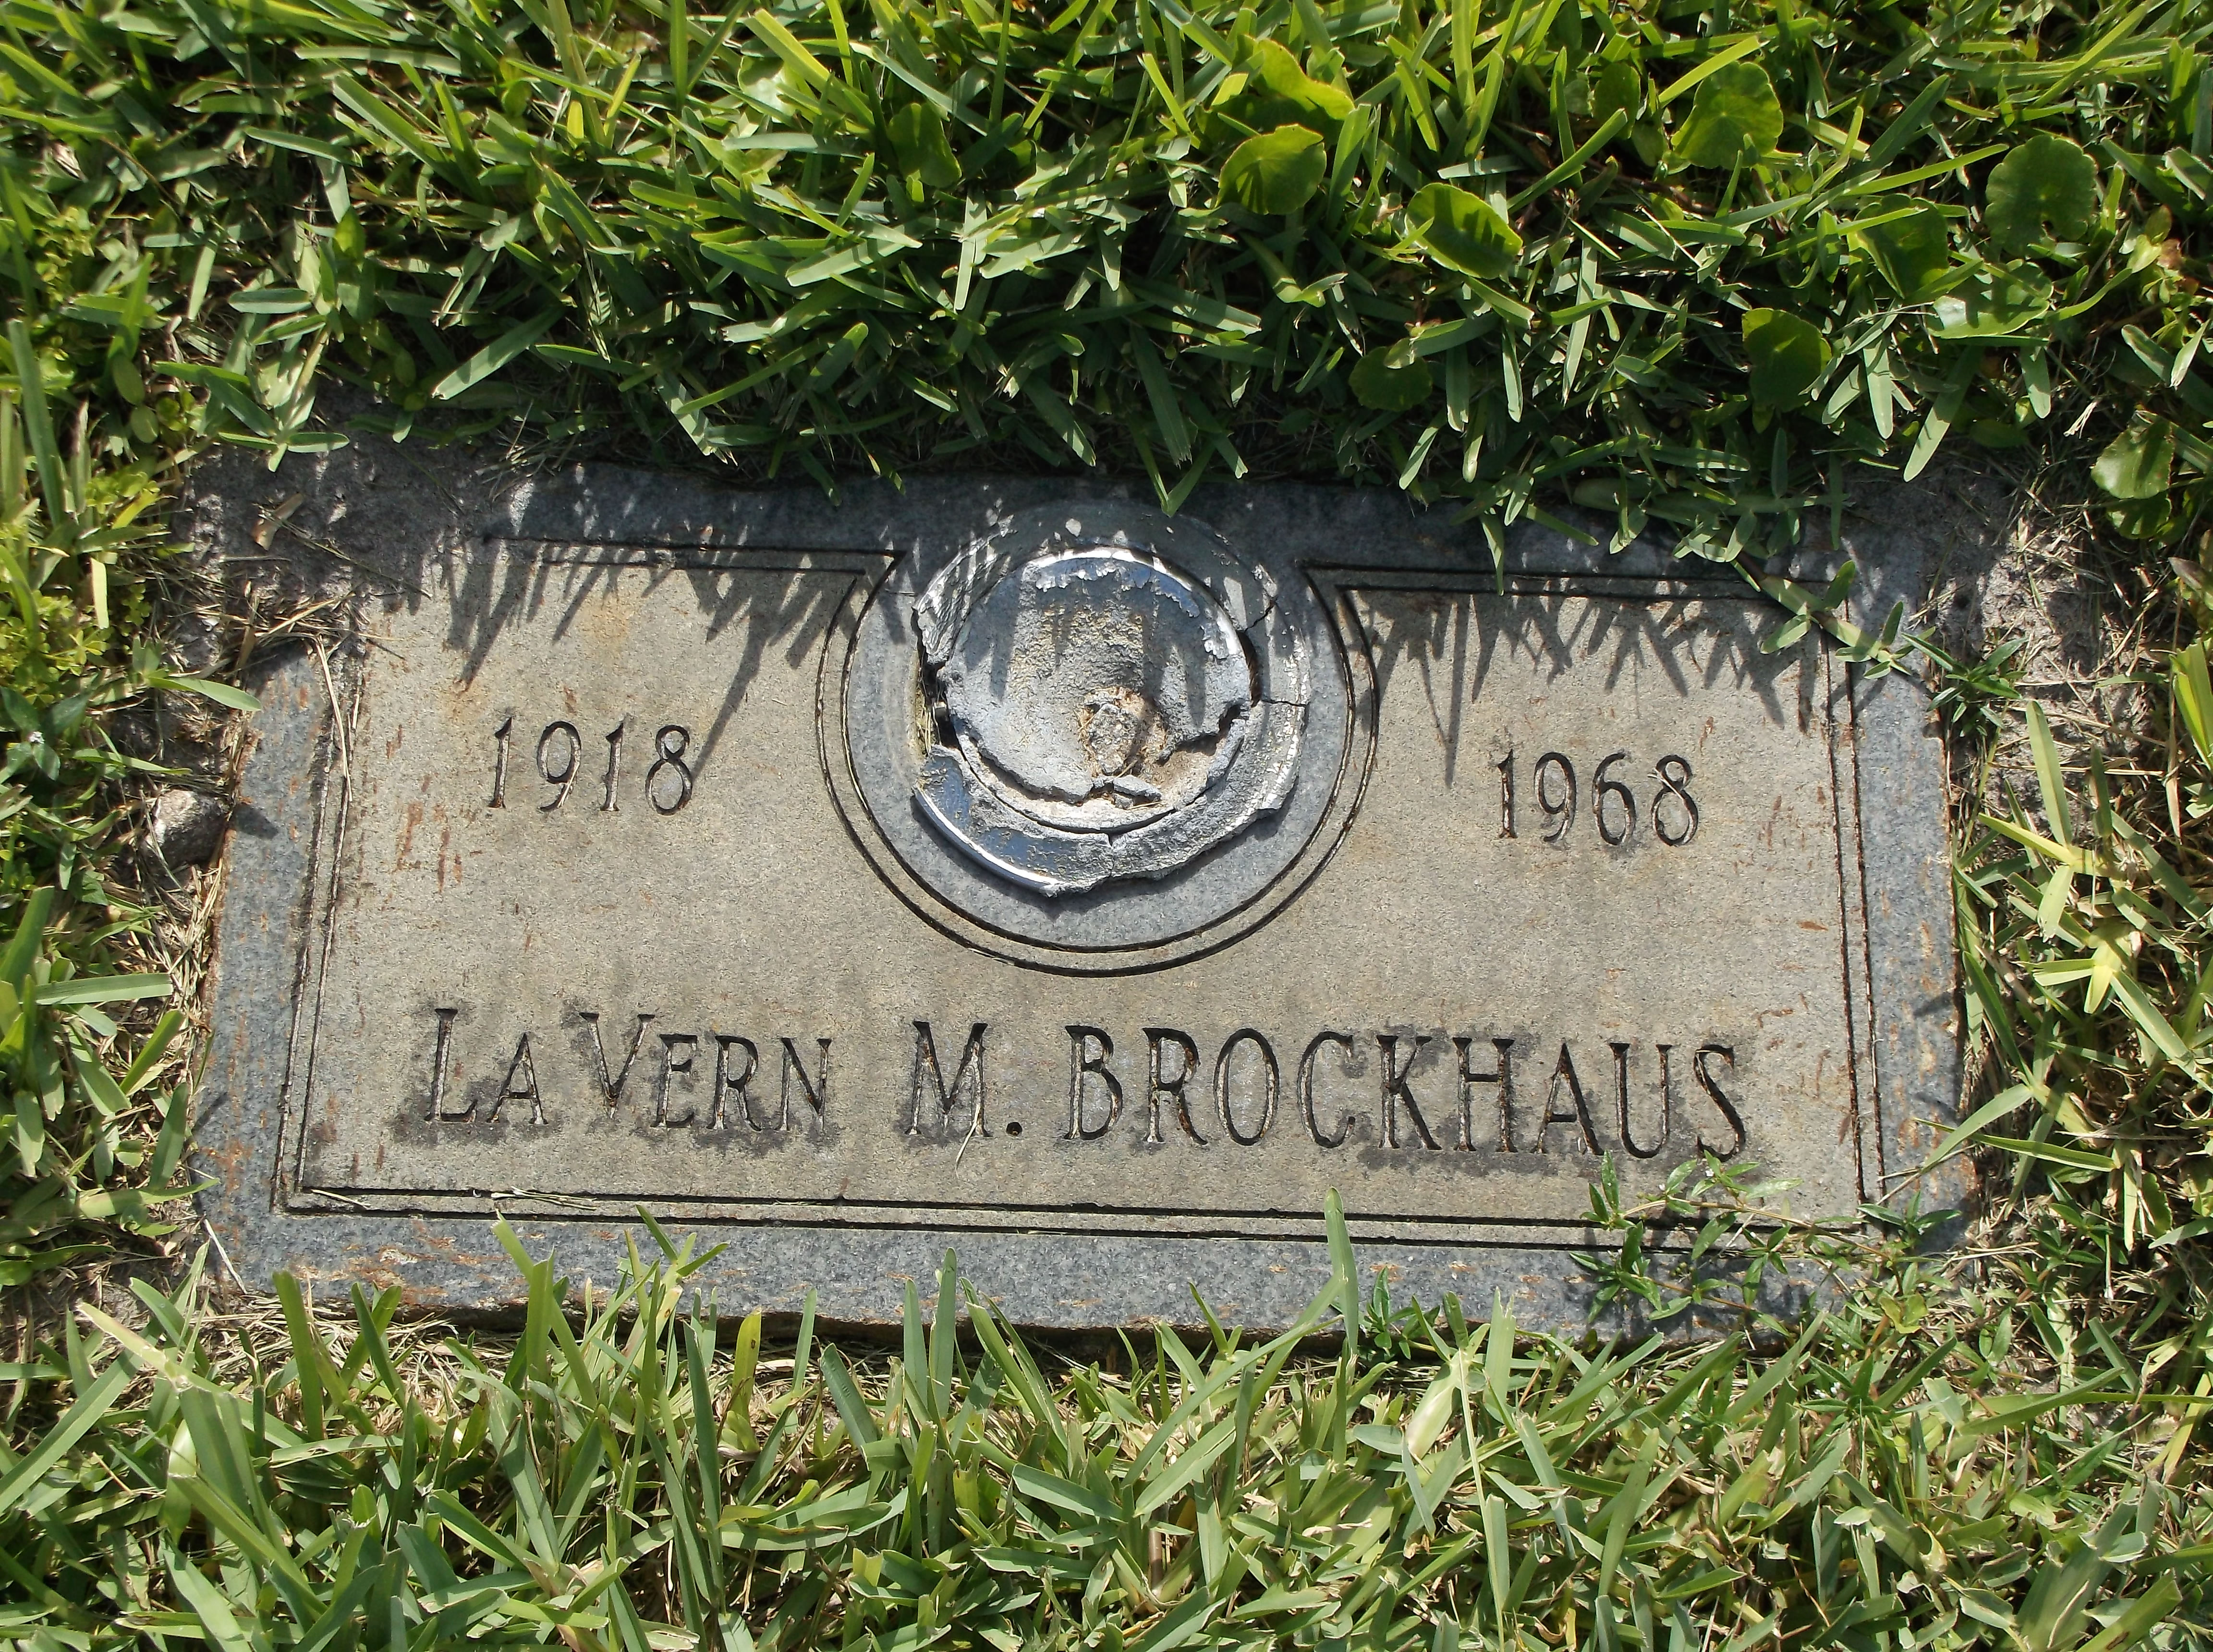 La Vern M Brockhaus